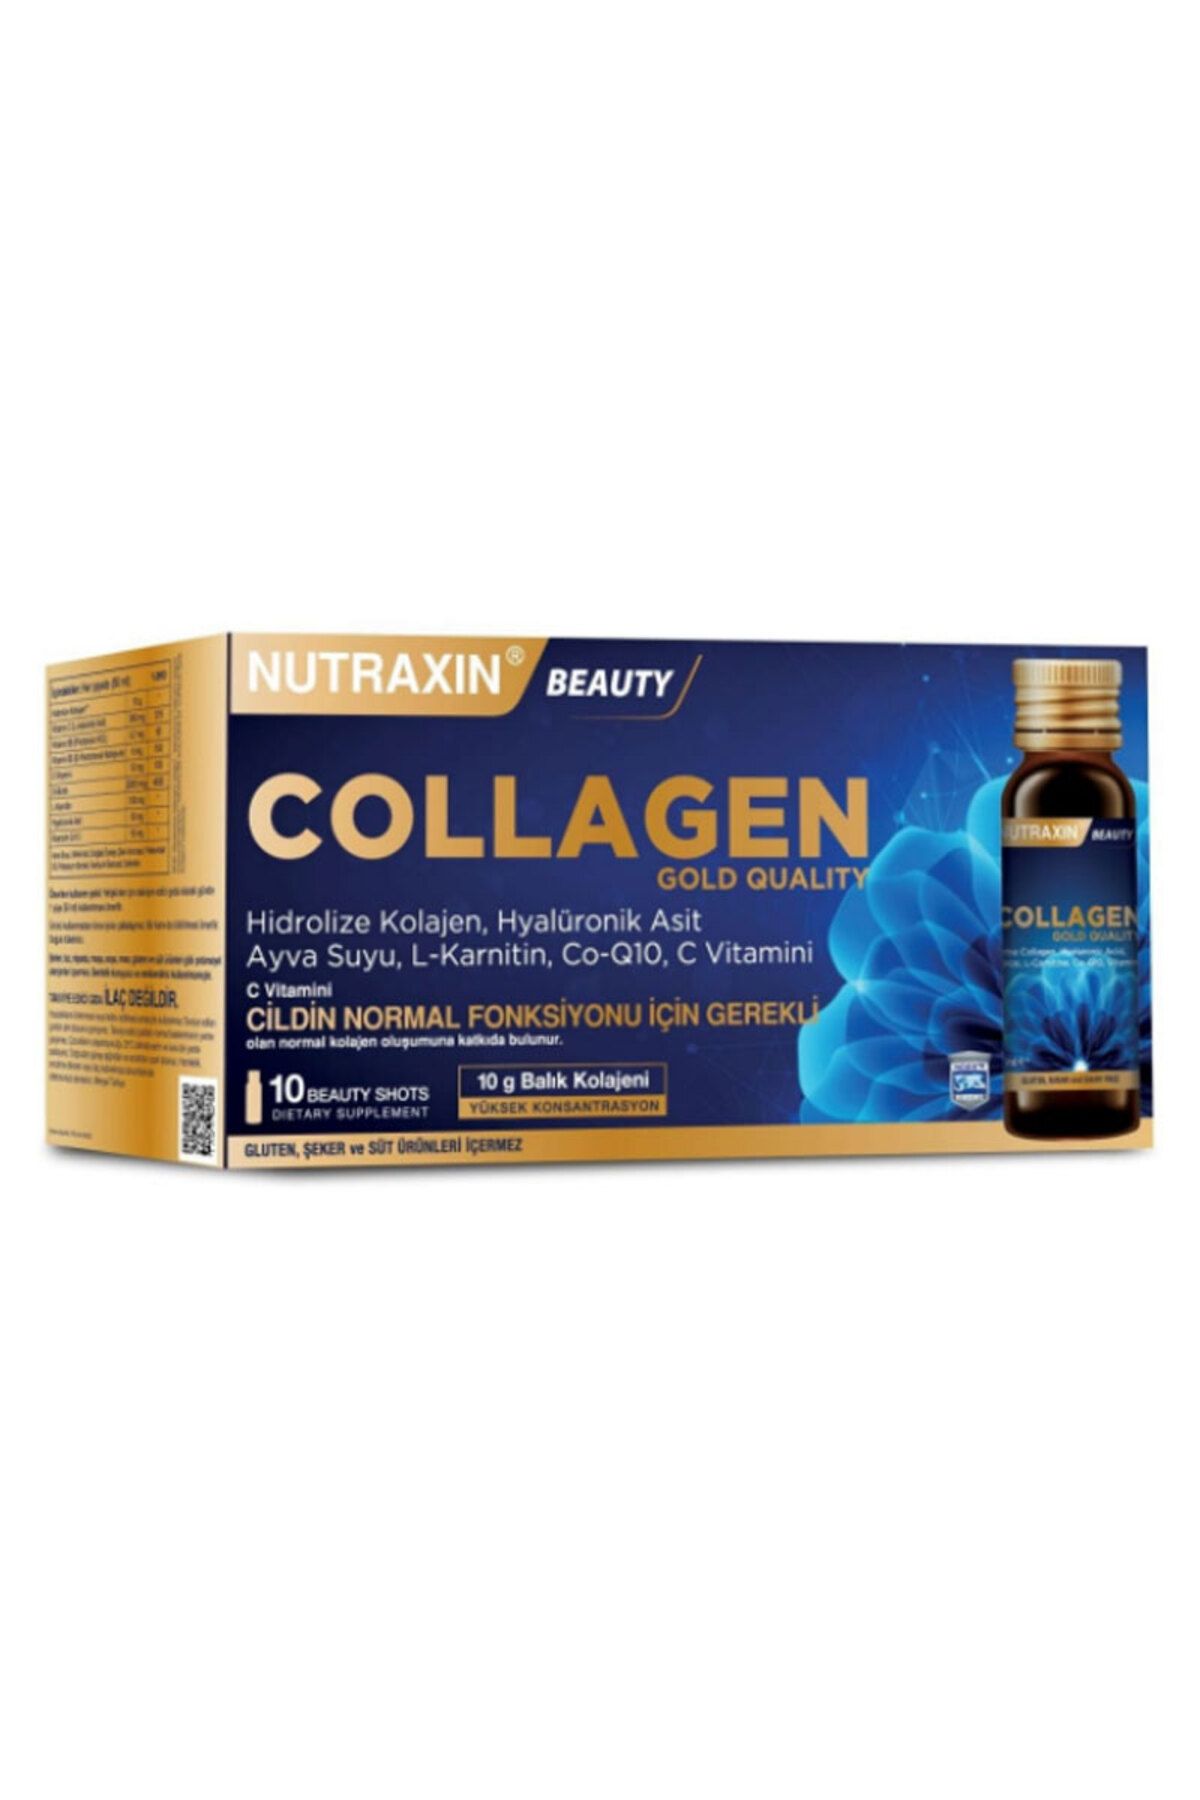 Nutraxin Collagen 10X50 ml ( 1 ADET )